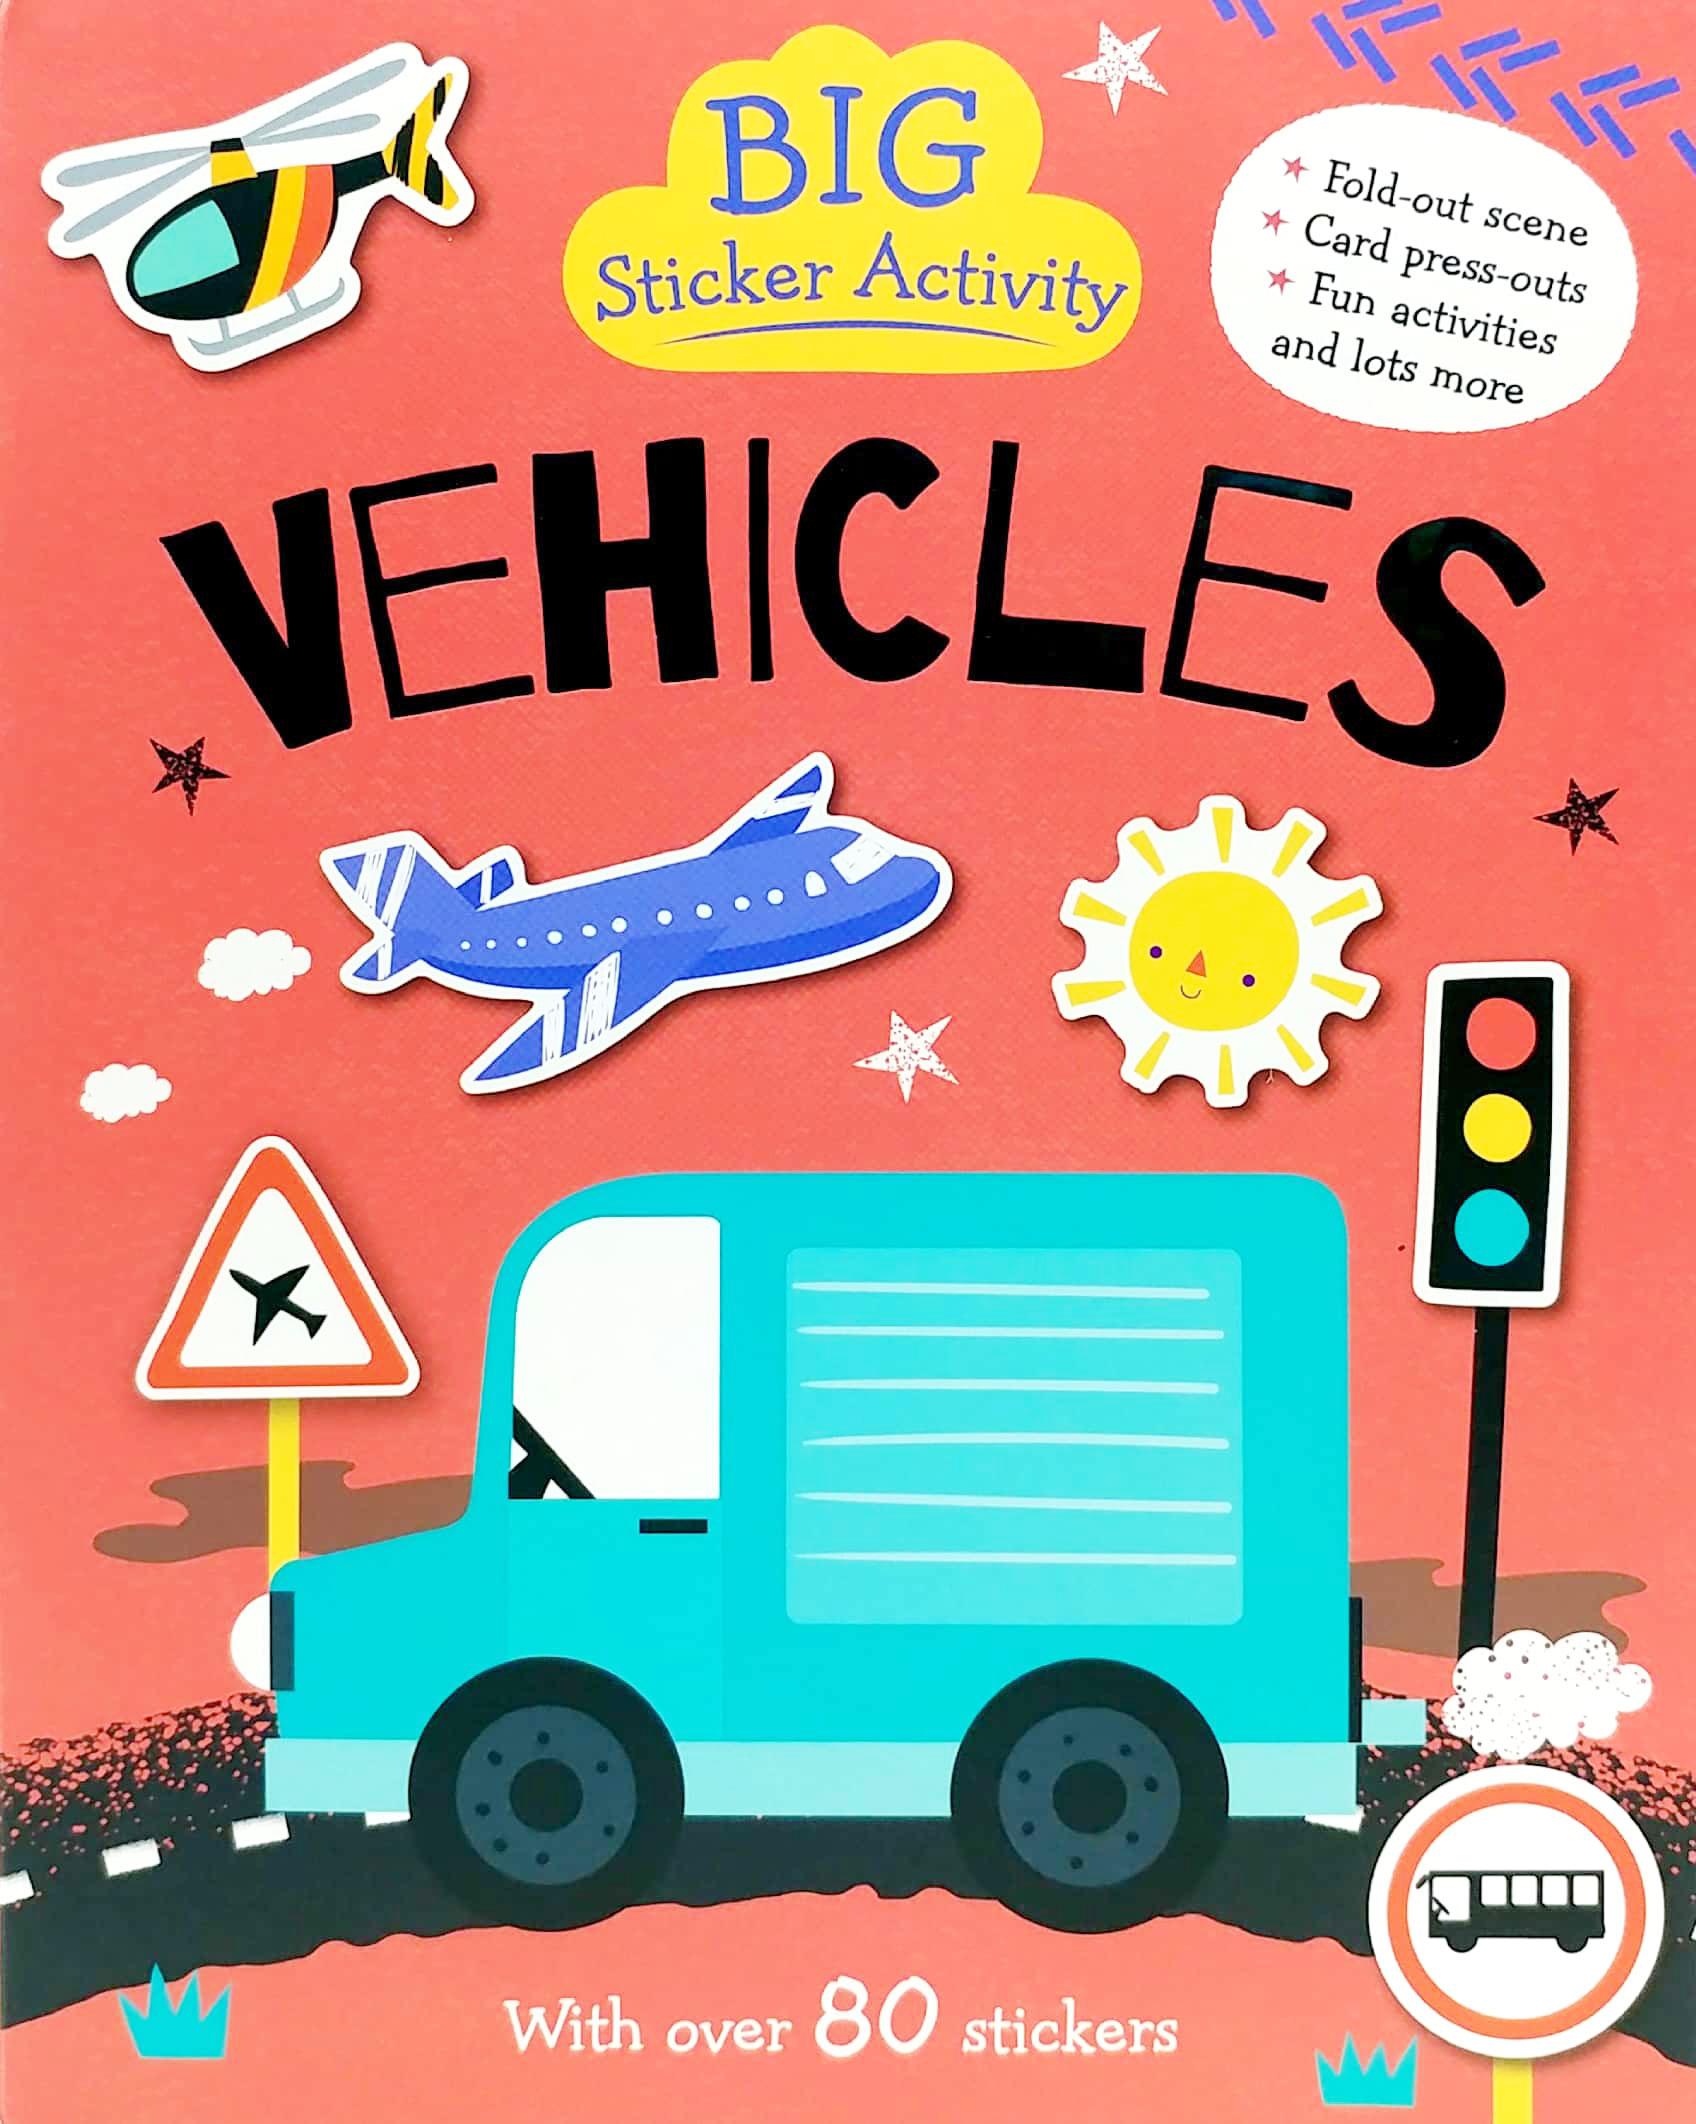 Big Sticker Activity - Vehicles